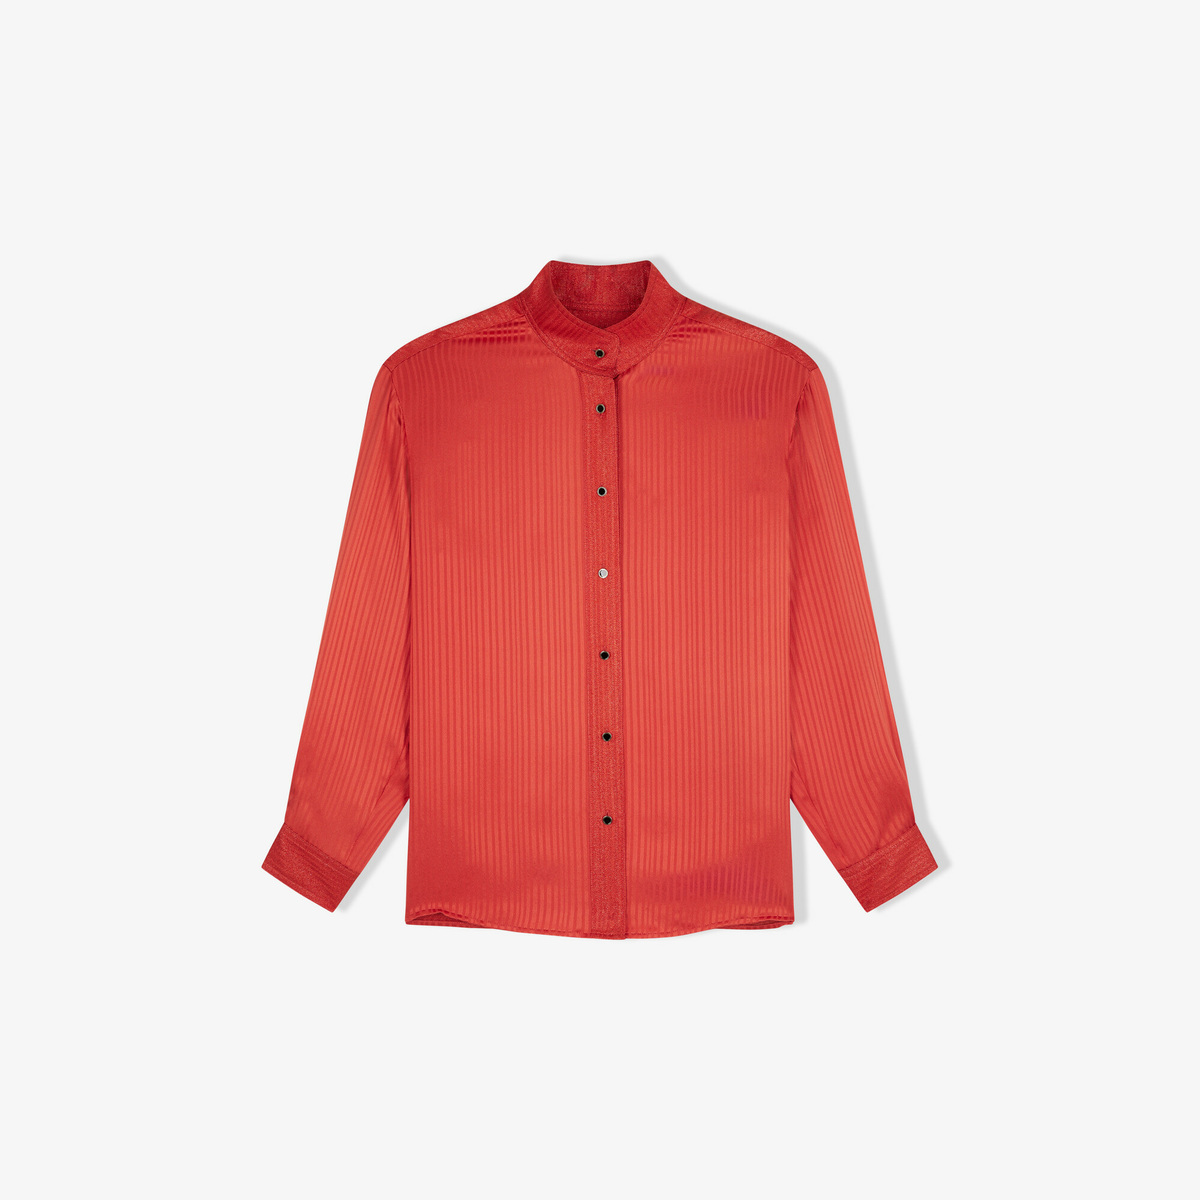 Valois Jacquard Shirt, Blood Orange - Silk - image 1